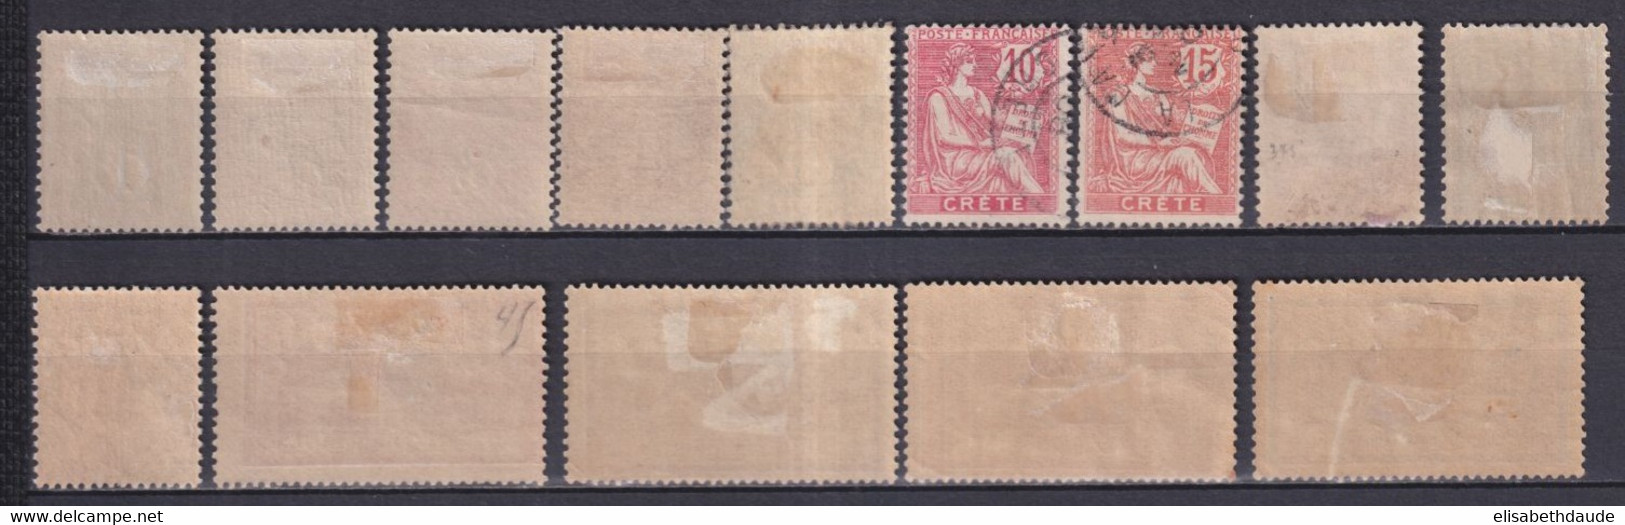 CRETE - YVERT N°1/14 * MH (2 TIMBRES OBLITERES + 1 TIMBRE SANS GOMME + QUELQUES CHARNIERES FORTES) - COTE = 156 EUR. - Unused Stamps